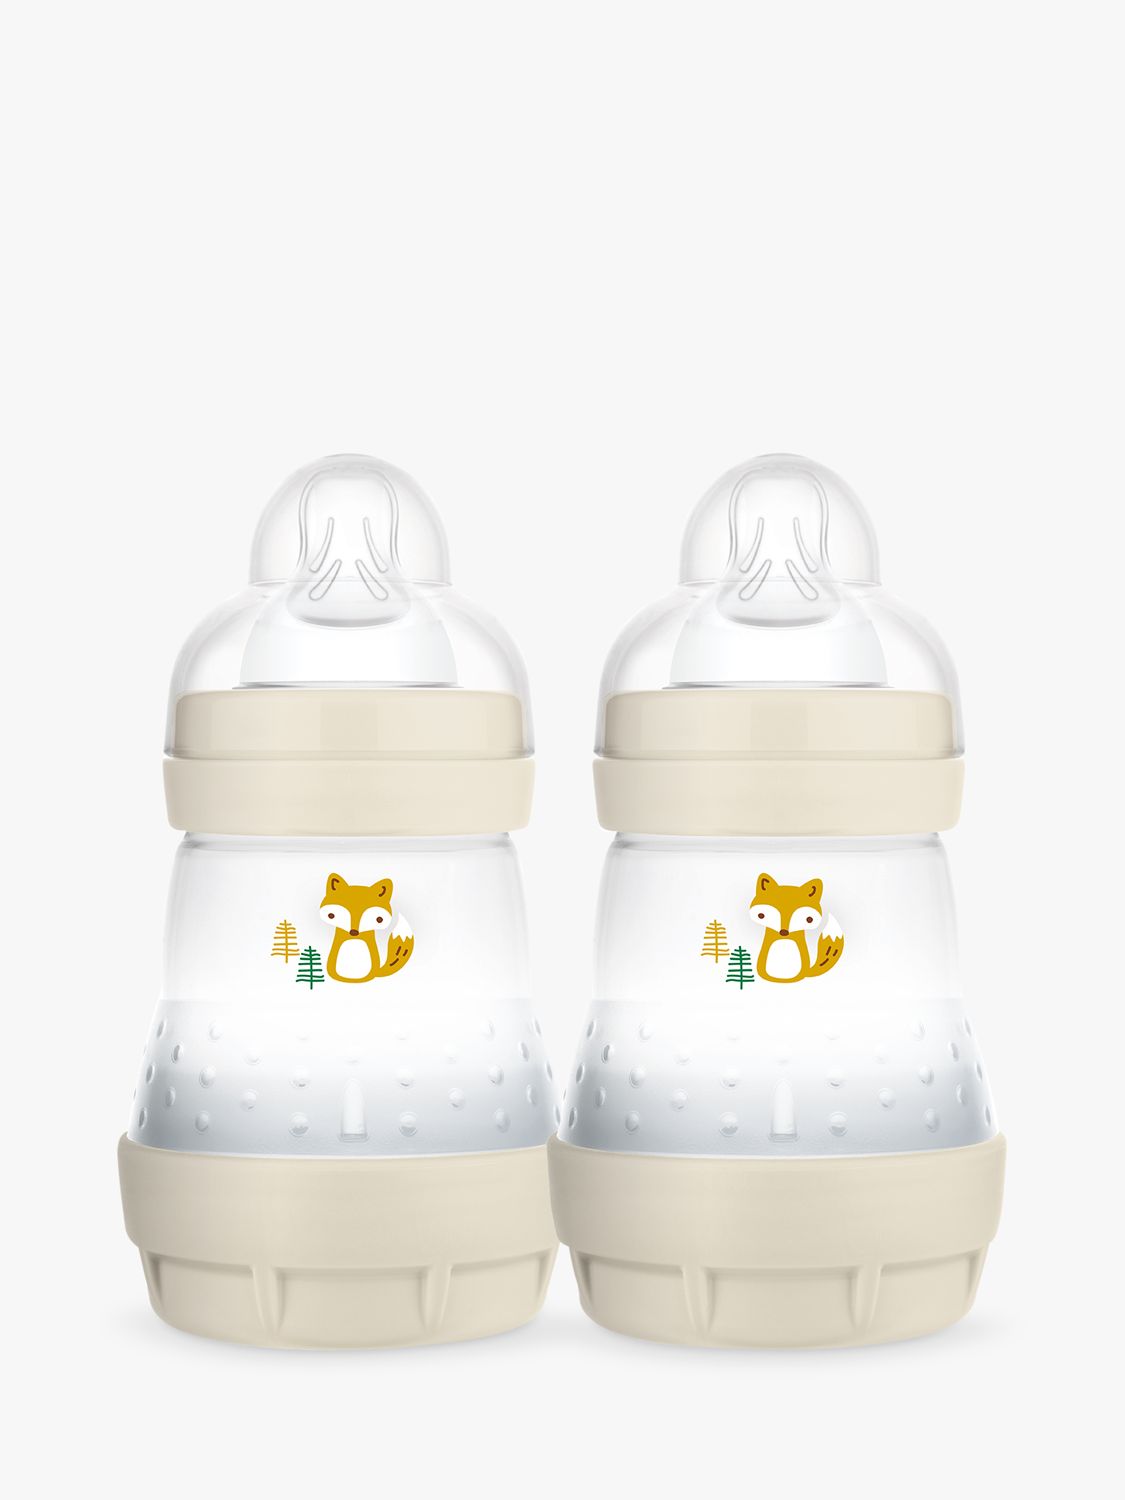 MAM Easy Start Anti-Colic Baby Bottle, 160ml, Pack of 2, Assorted